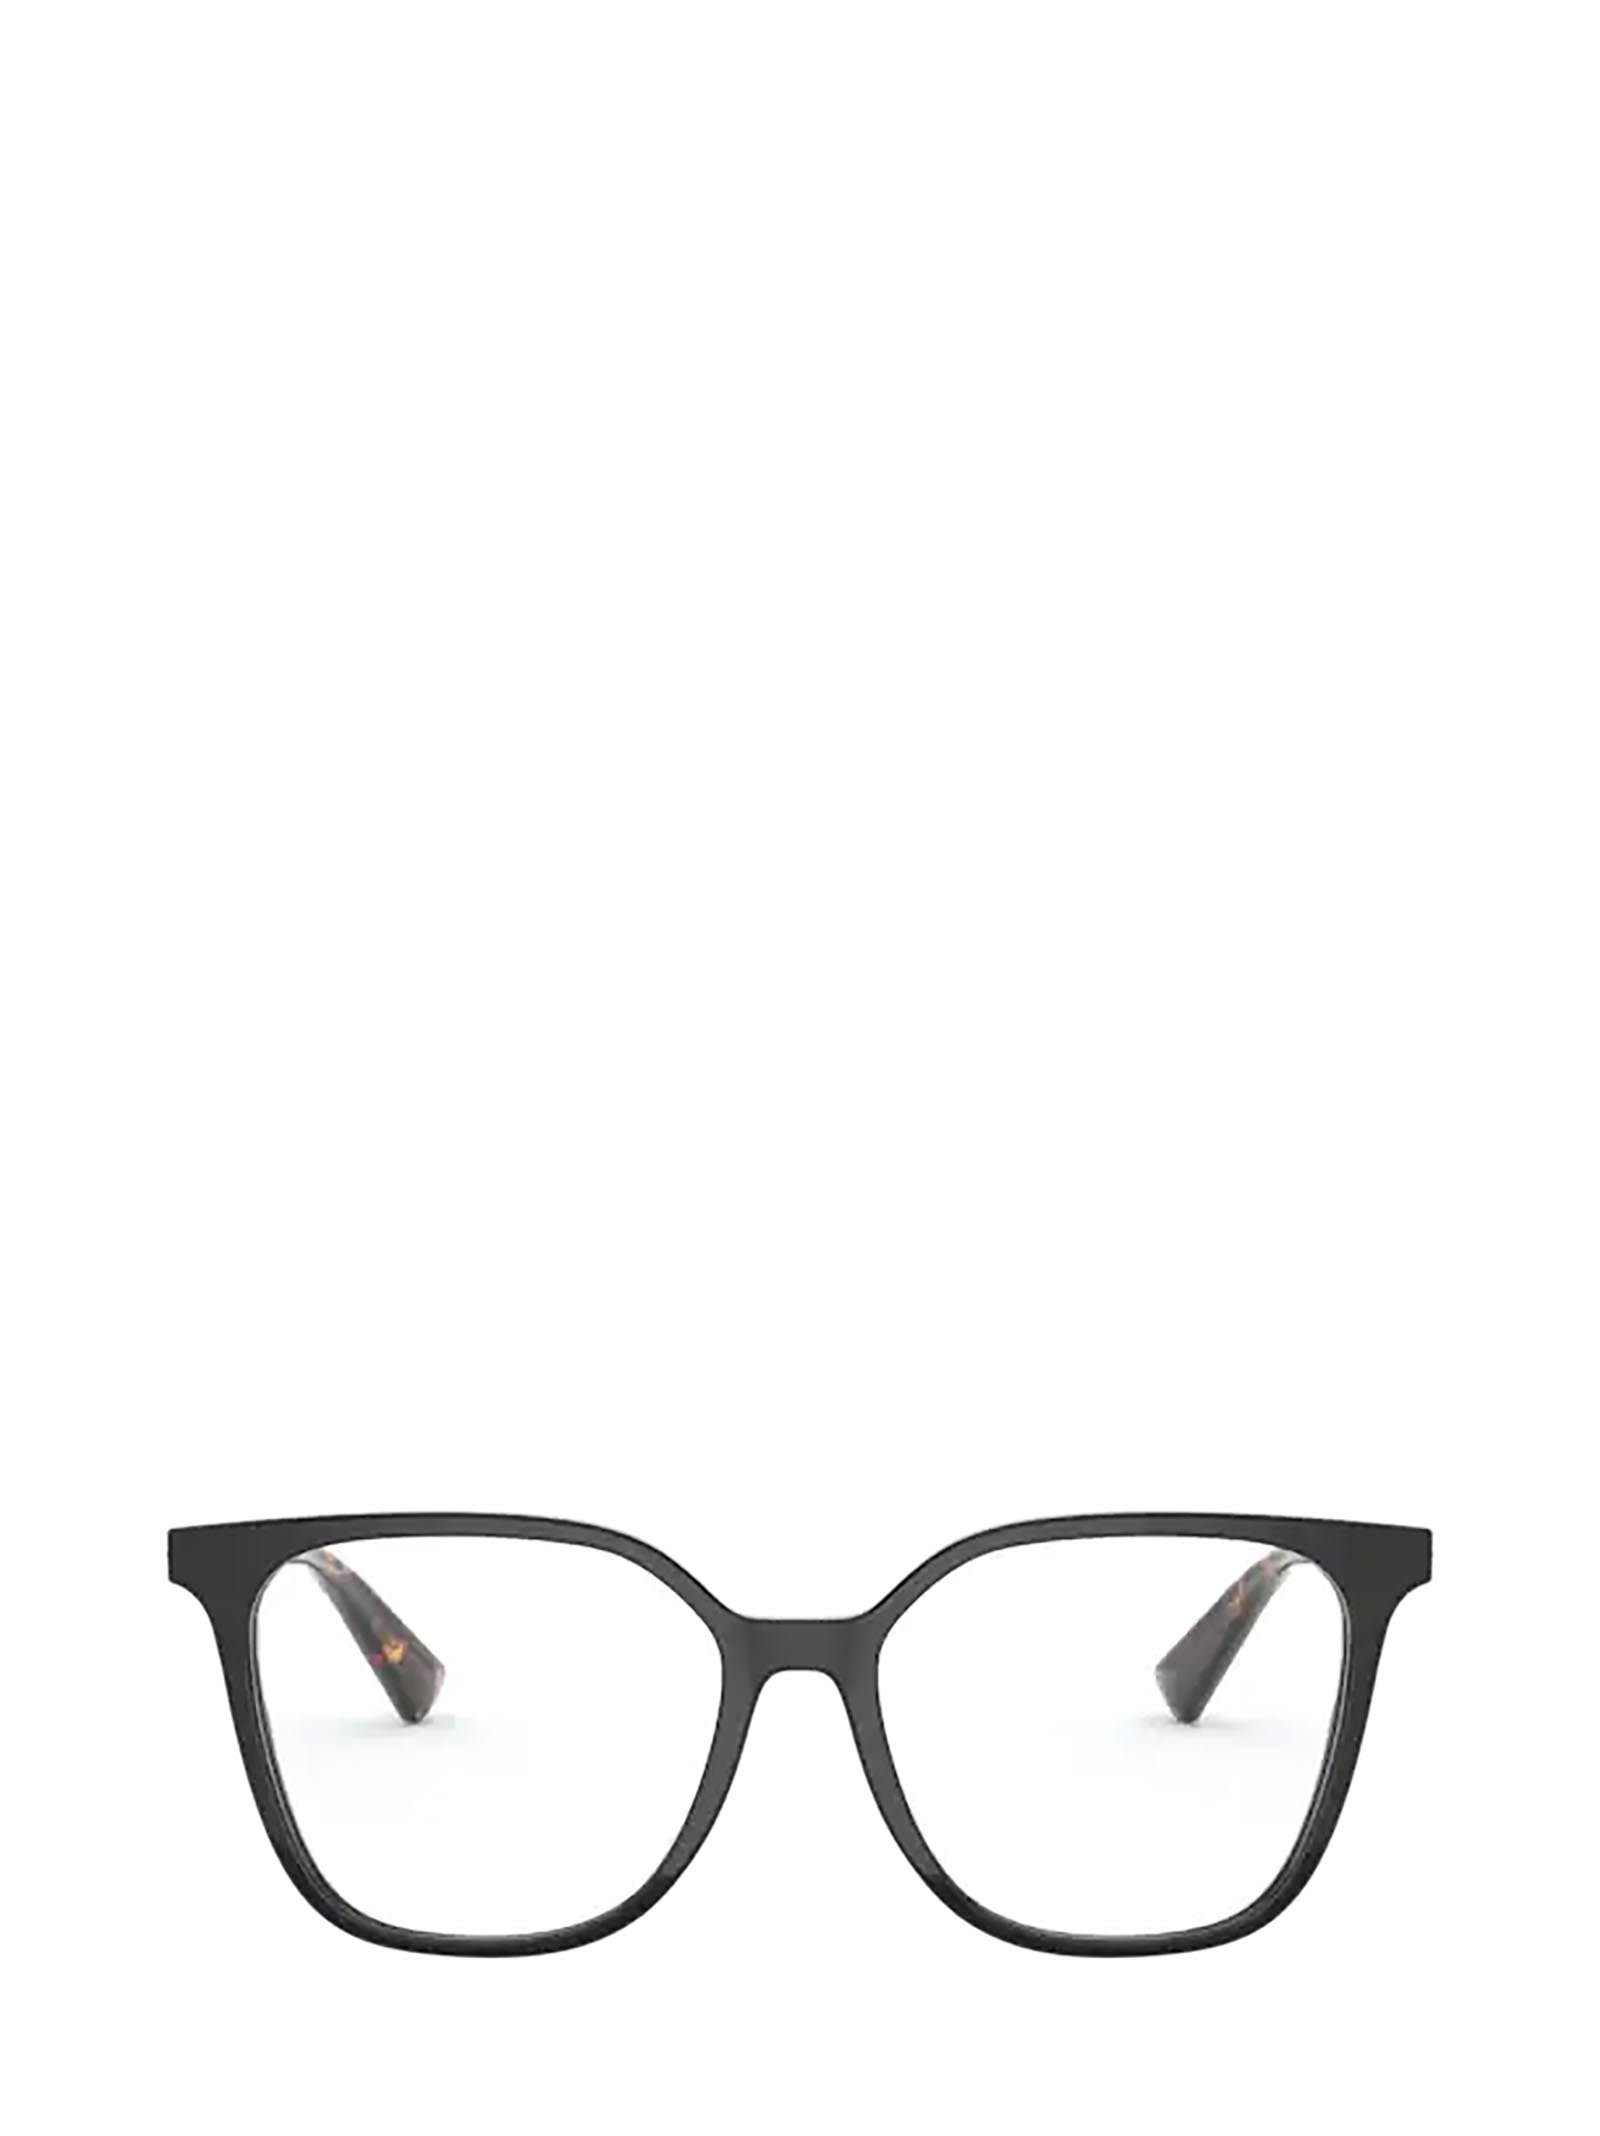 Shop Now For The Valentino Eyewear Va3055 Black Glasses | AccuWeather Shop